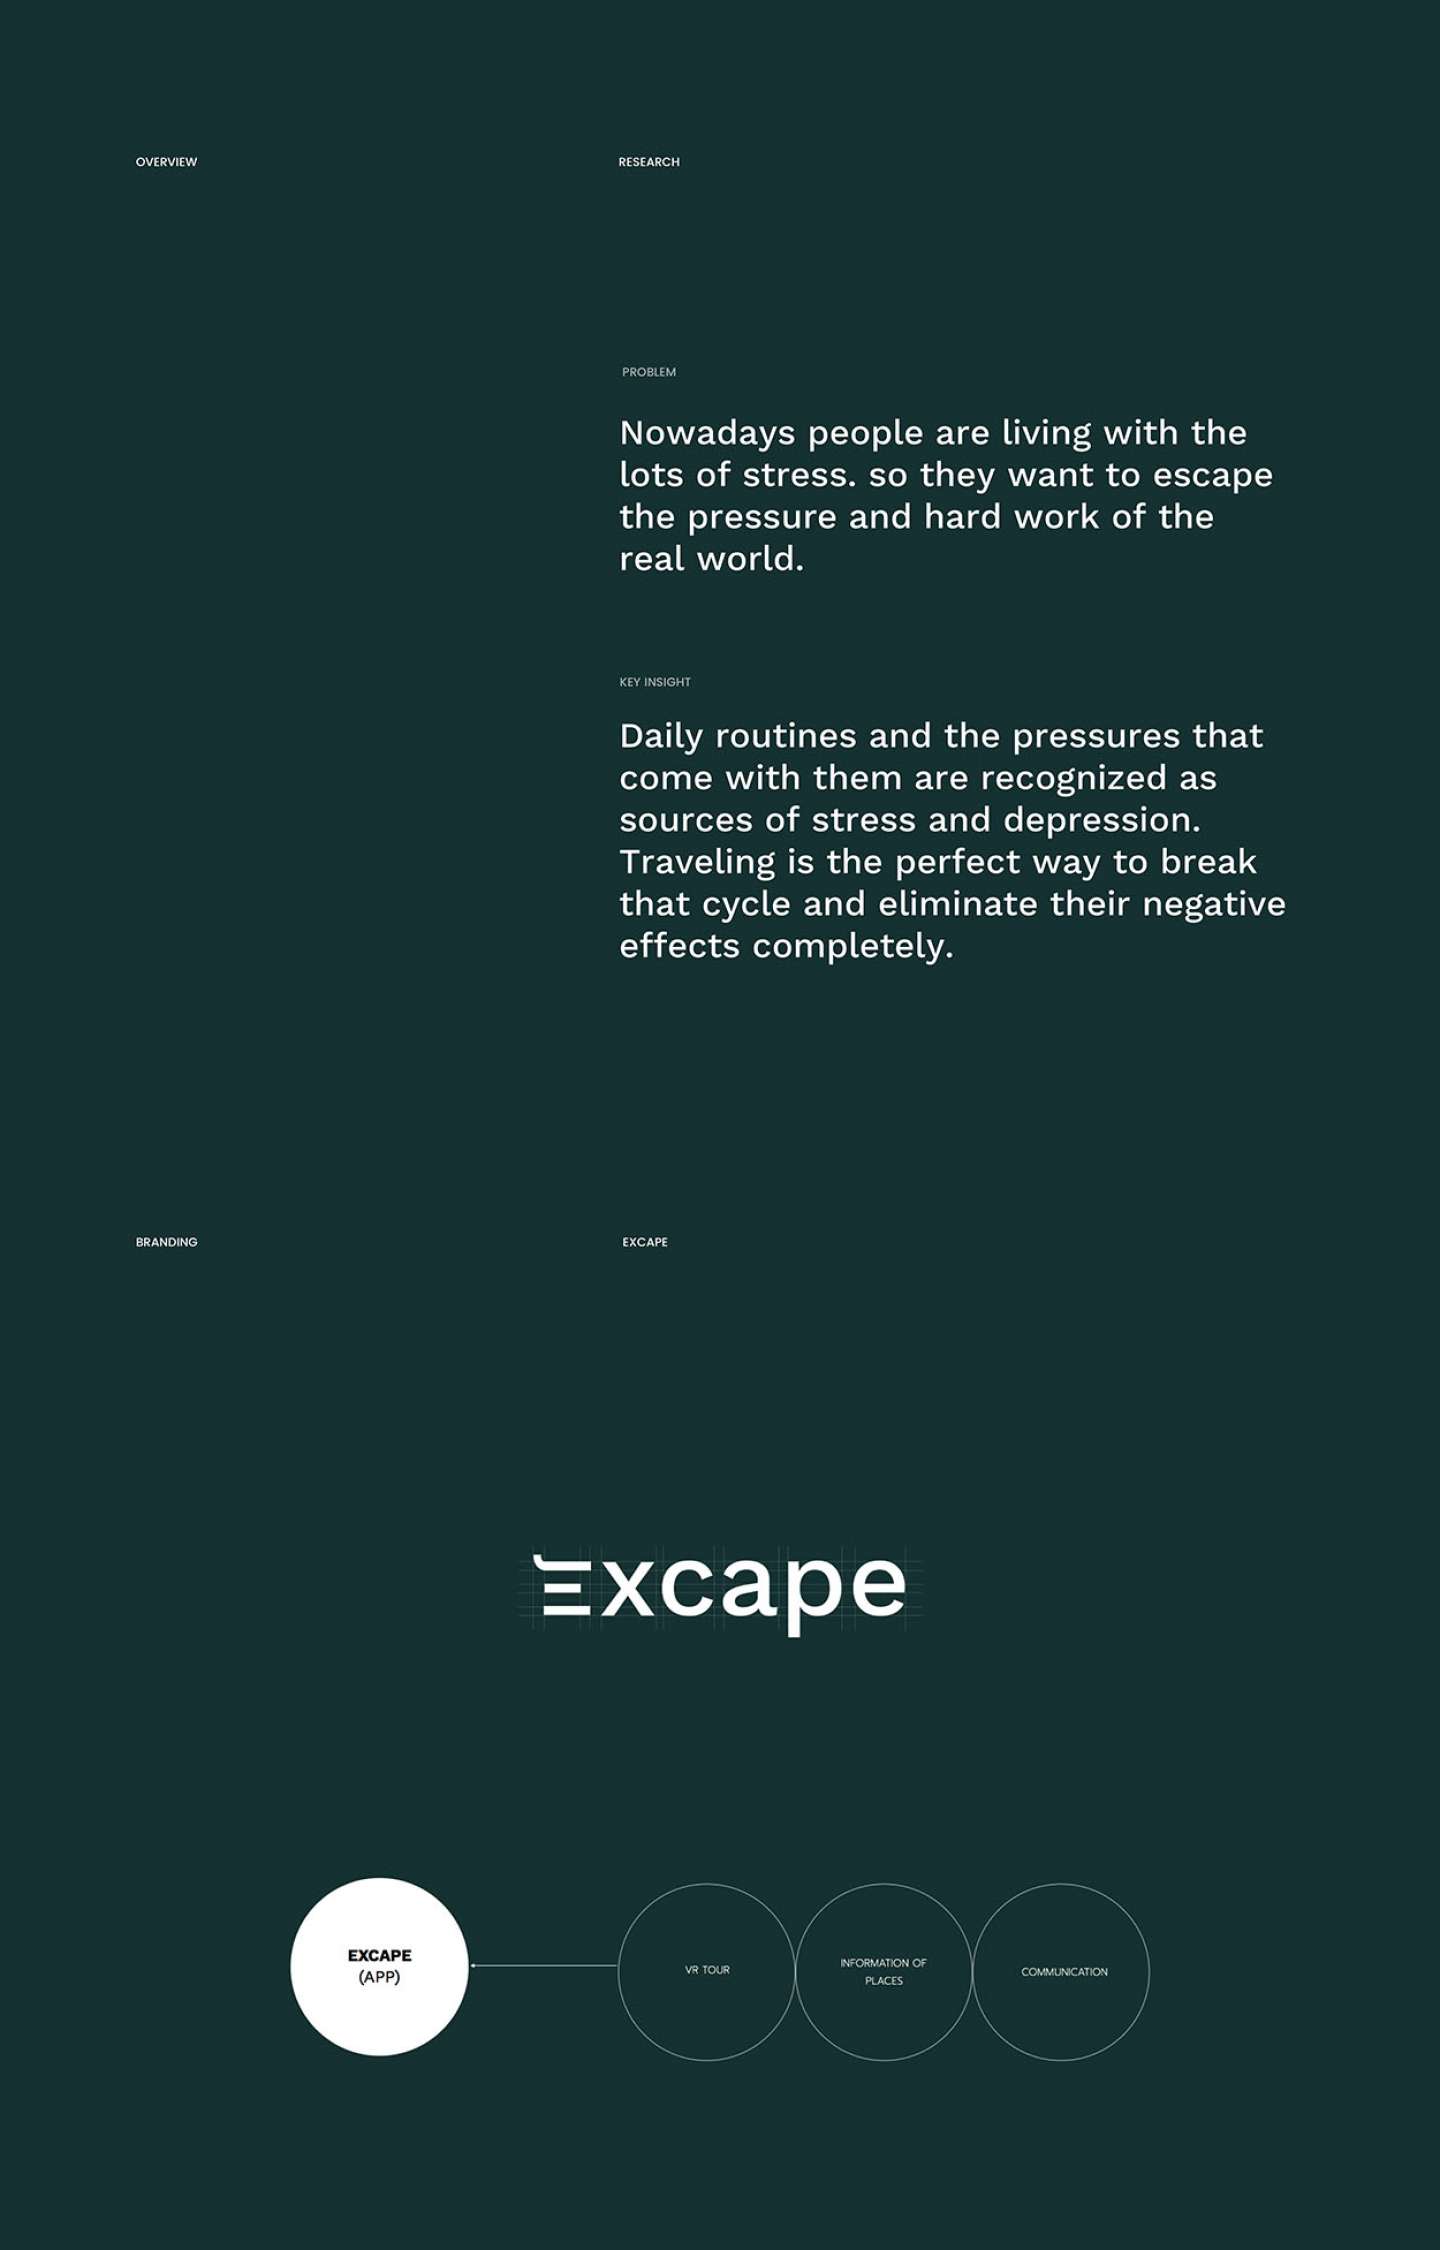 Excape